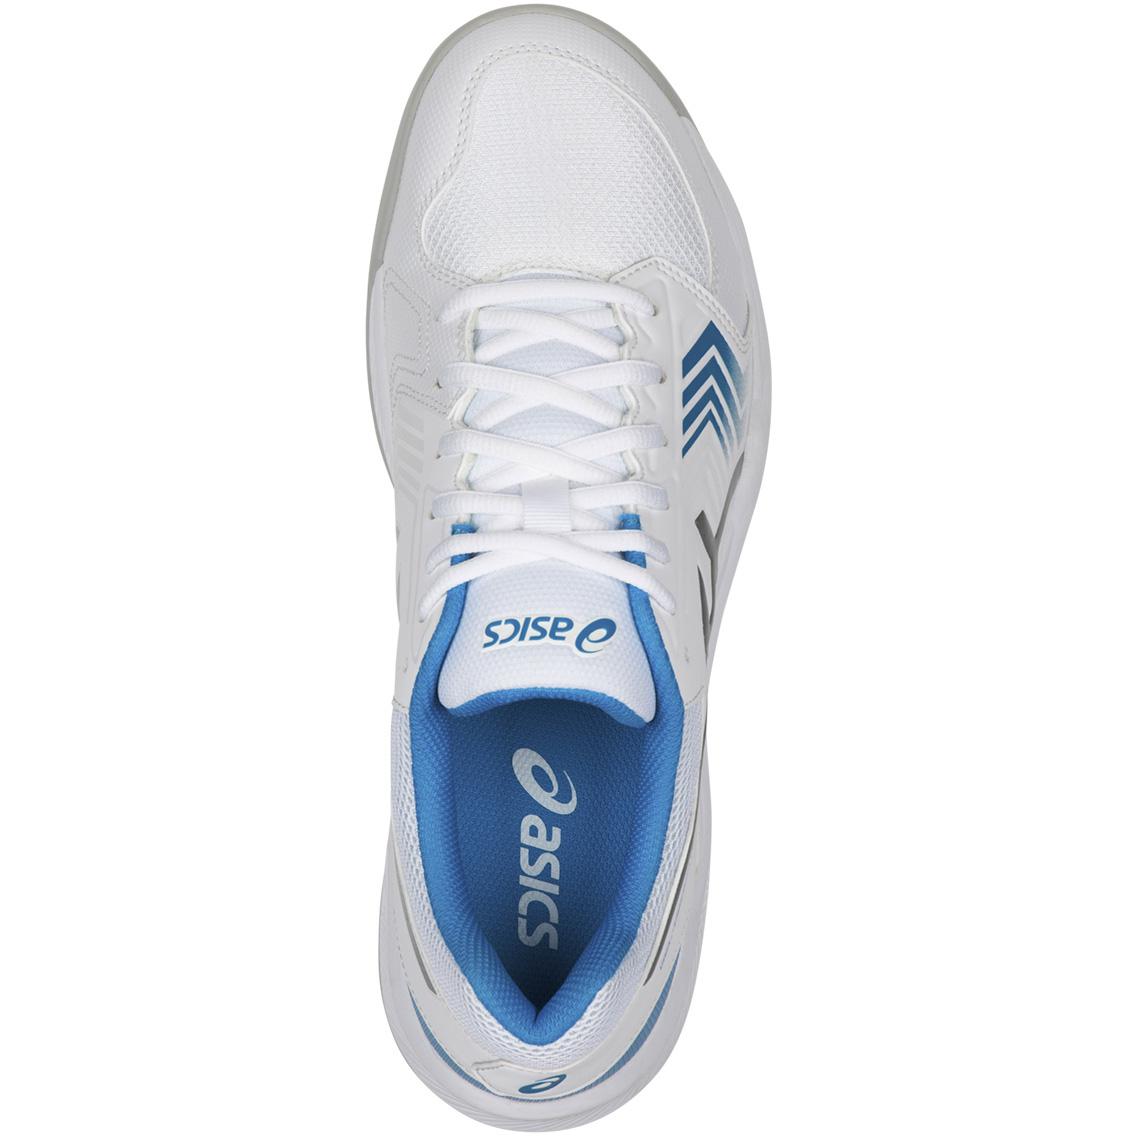 Asics Mens GEL-Dedicate 5 Indoor Carpet Tennis Shoes - White/Blue ...